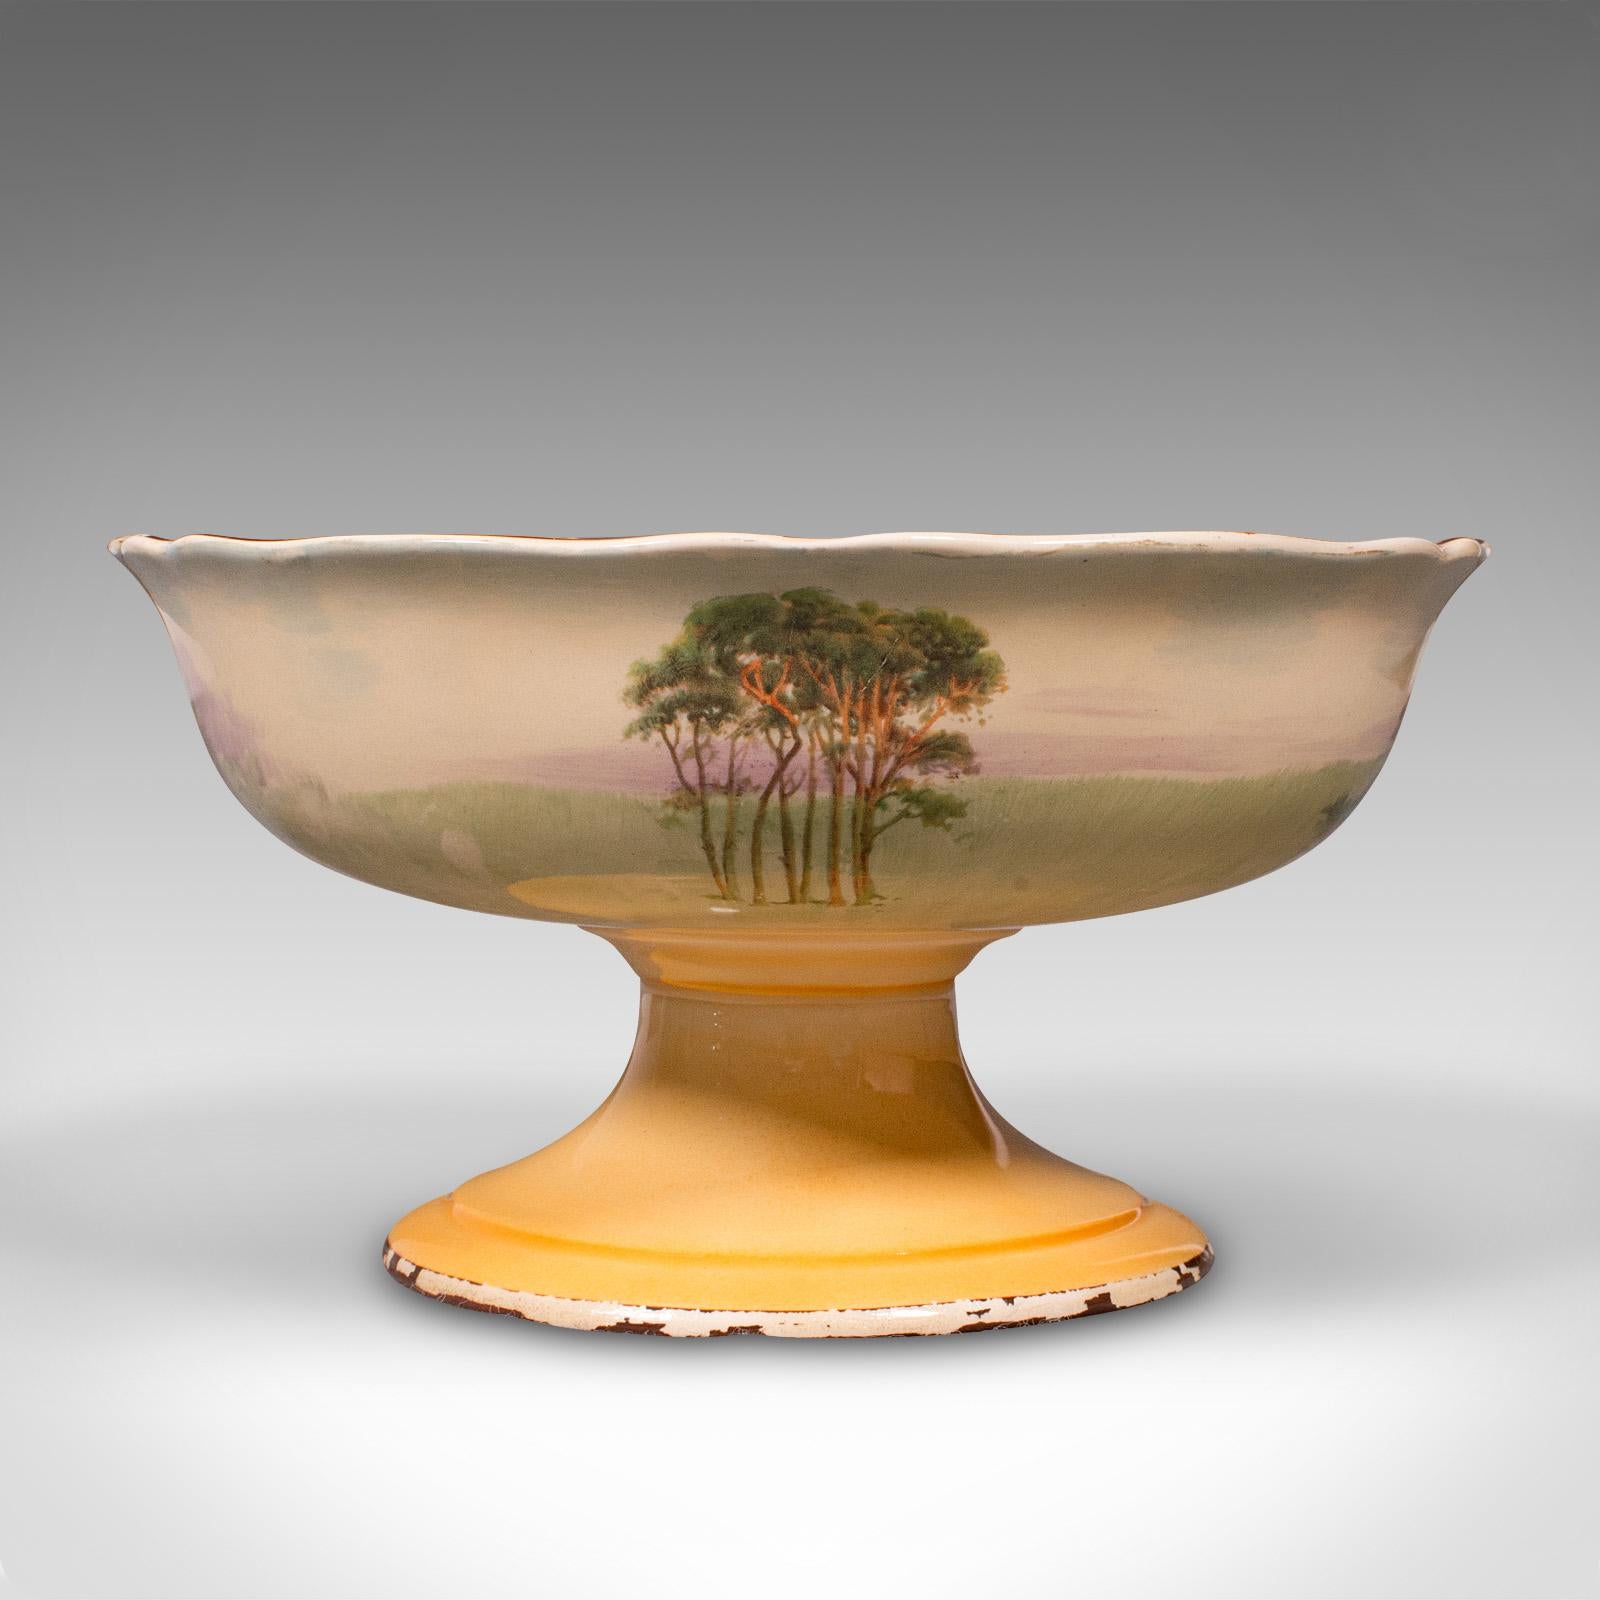 Vintage Decorative Footed Bowl, English, Ceramic, Serving Dish, Fruitbowl, 1930 For Sale 1